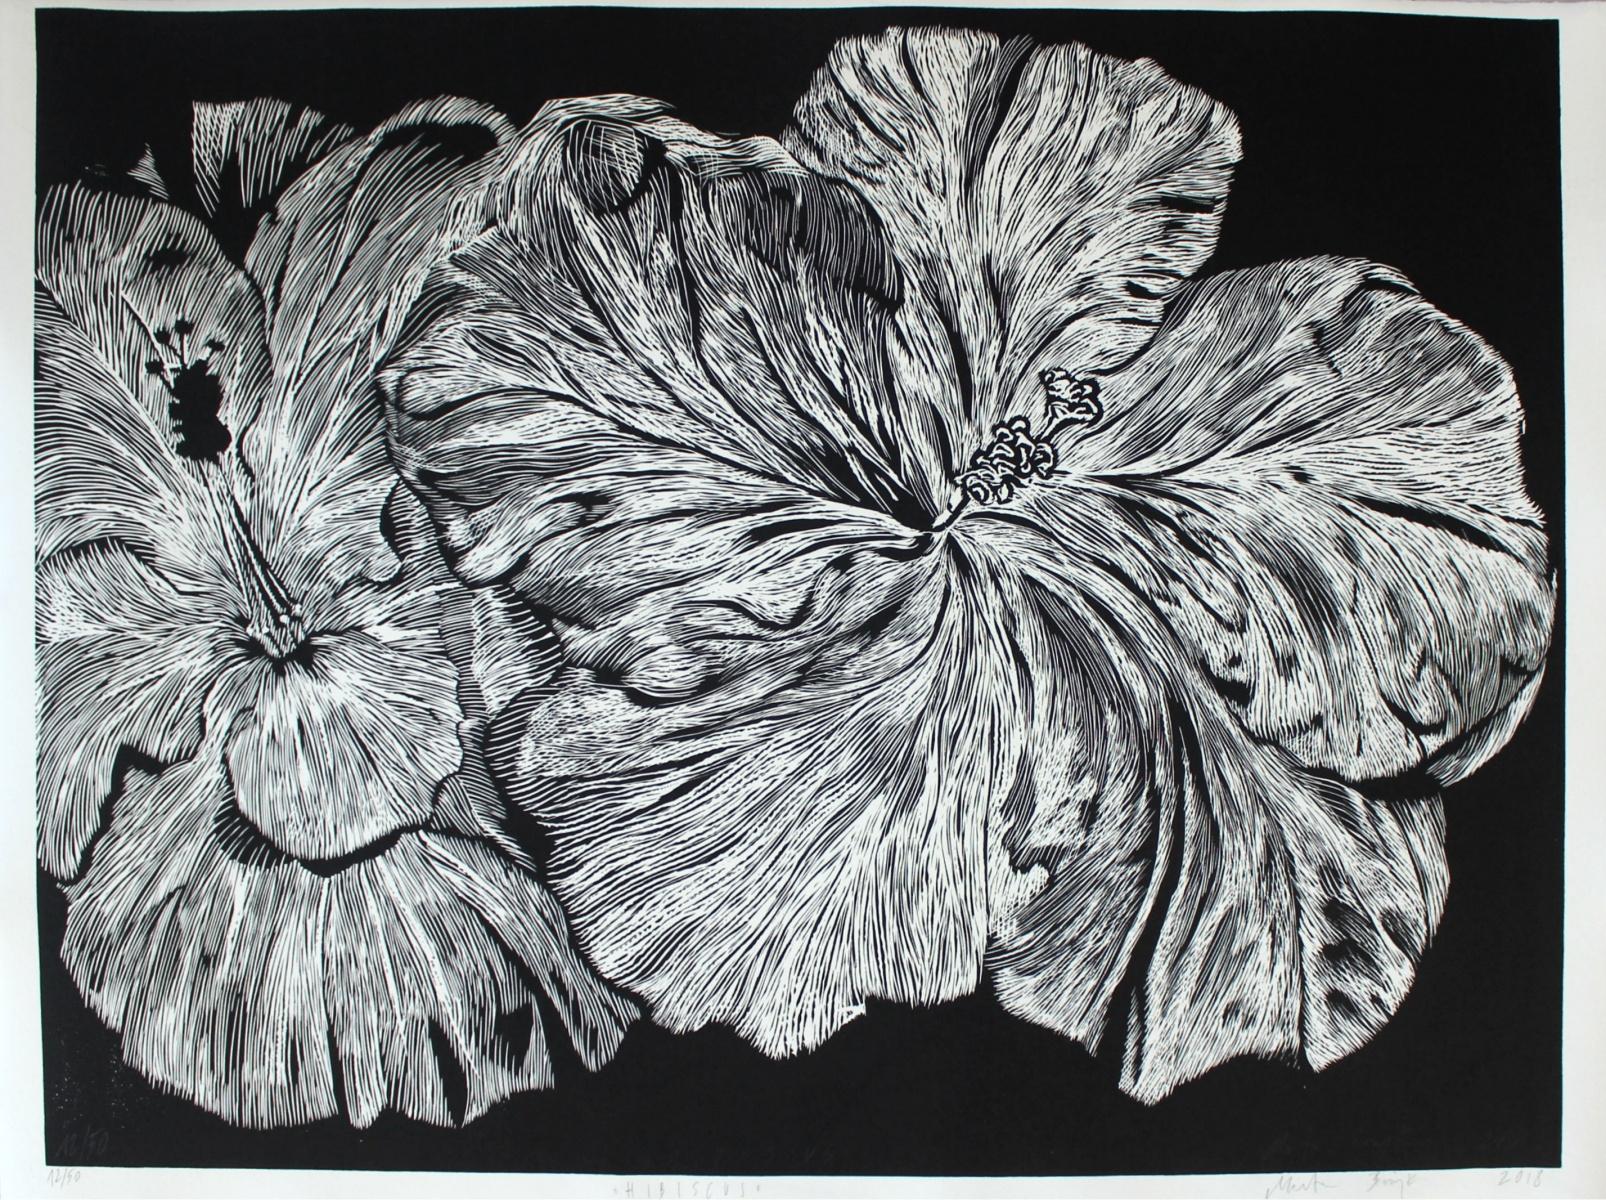 Hibiscus - XXI century, Linocut, Flower, Contemporary Figurative Art - Print by Marta Bozyk